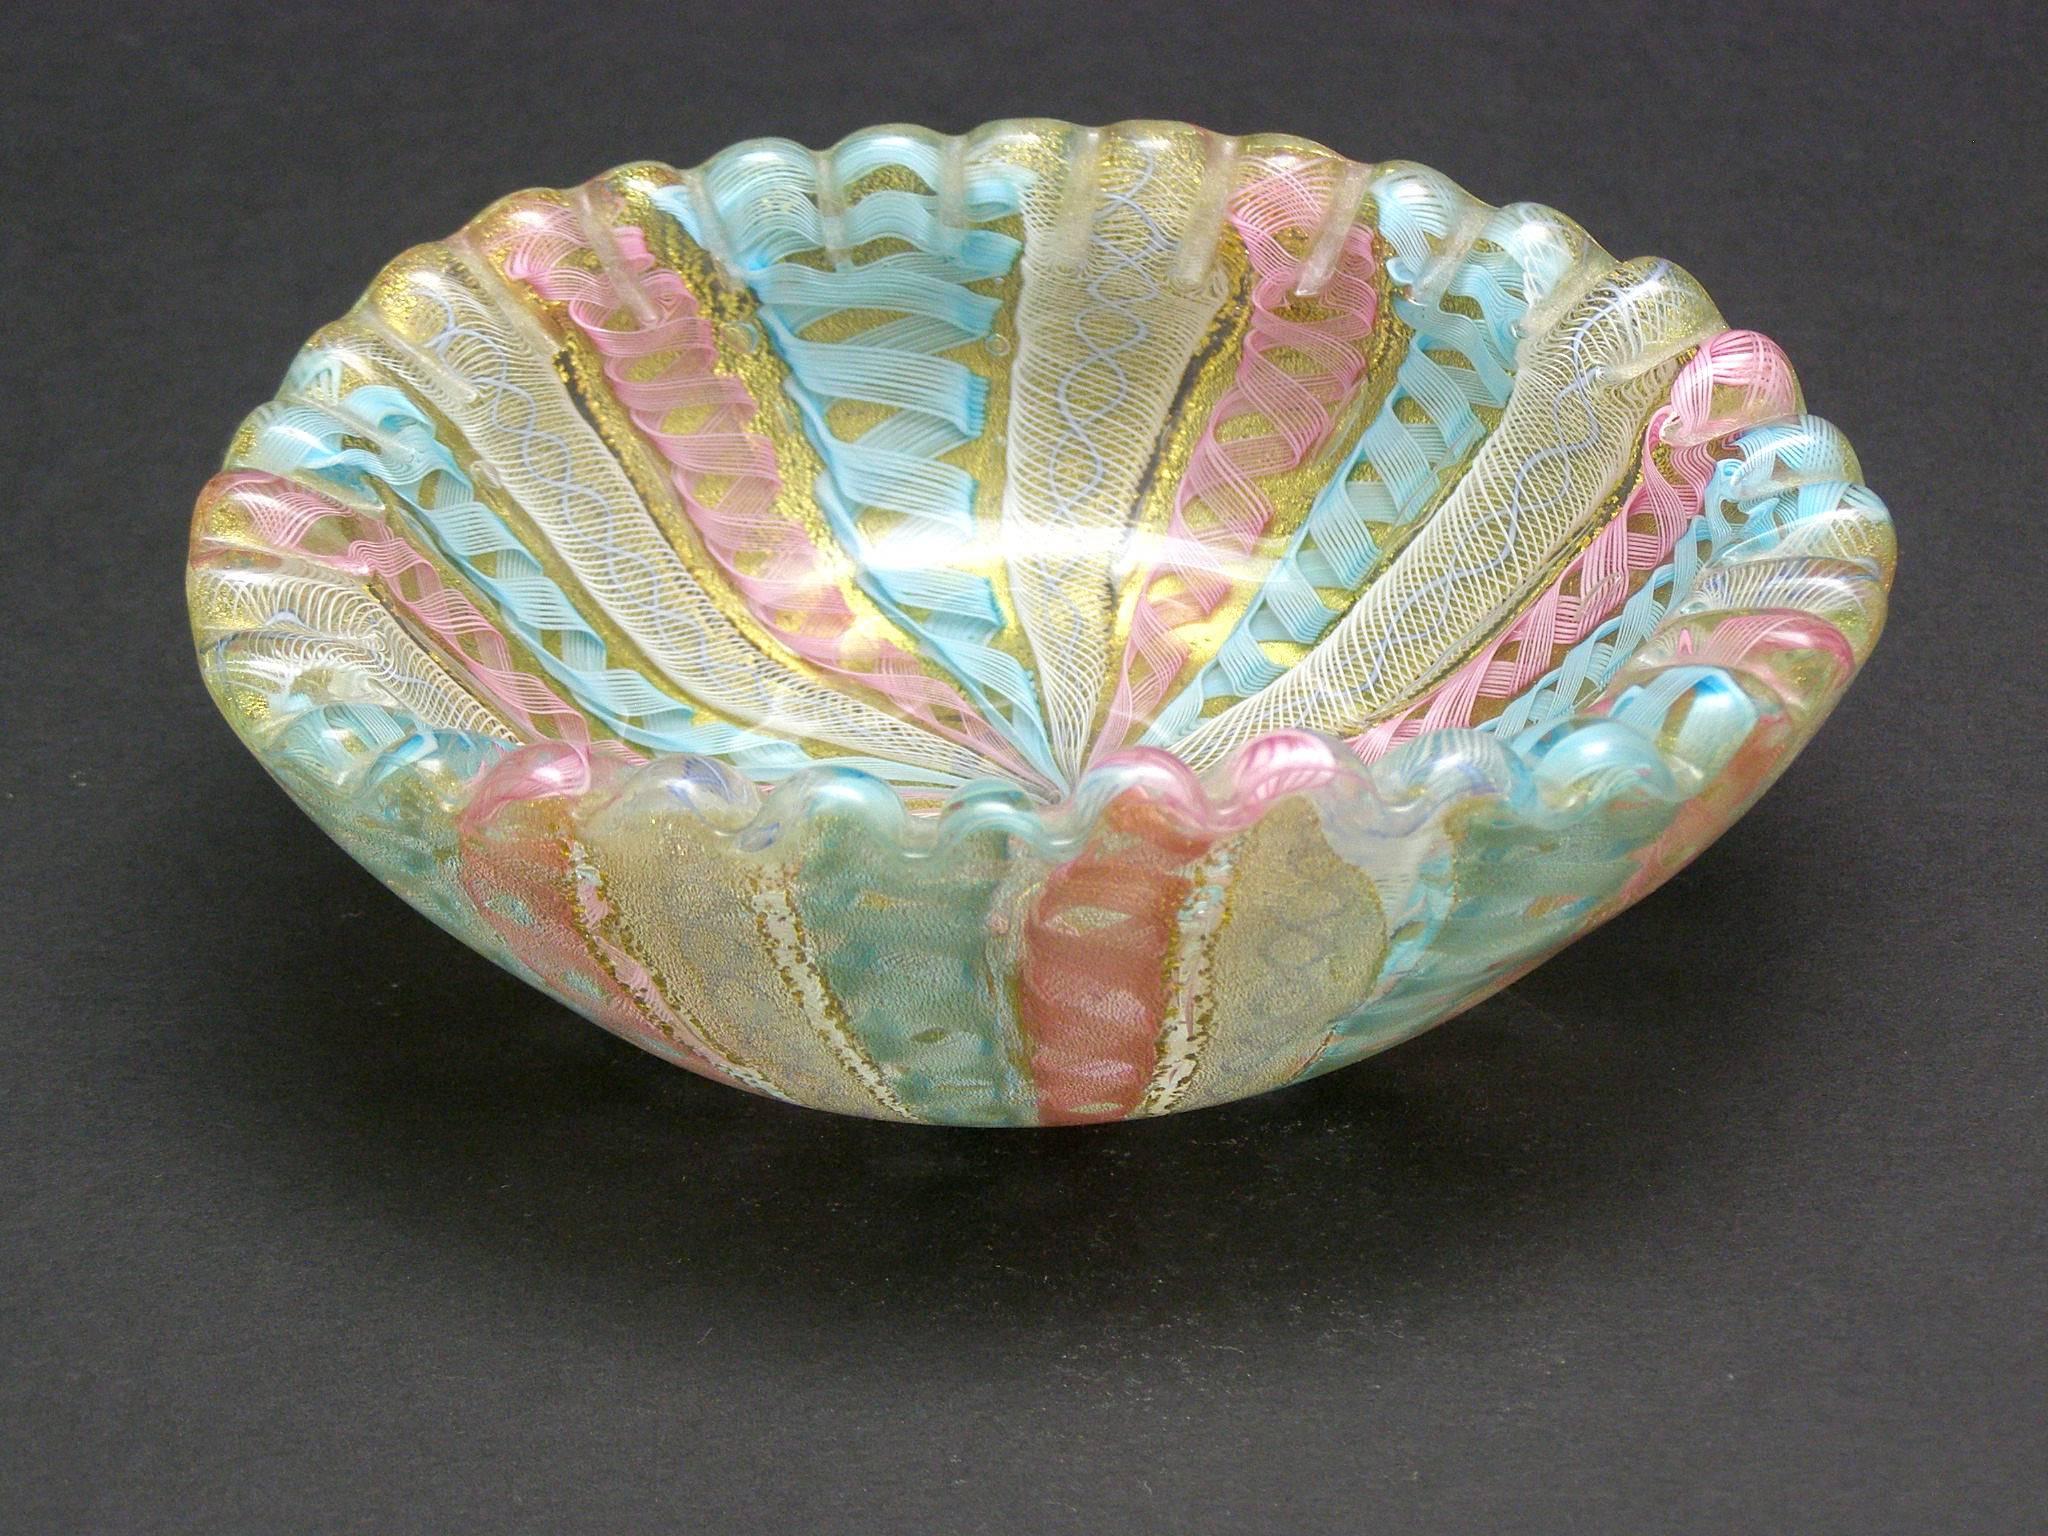 Beautiful handblown Murano glass small bowl in delicious shades of blues, pinks and golds using Latticino, Ballotini and Zanfirico blowing techniques.